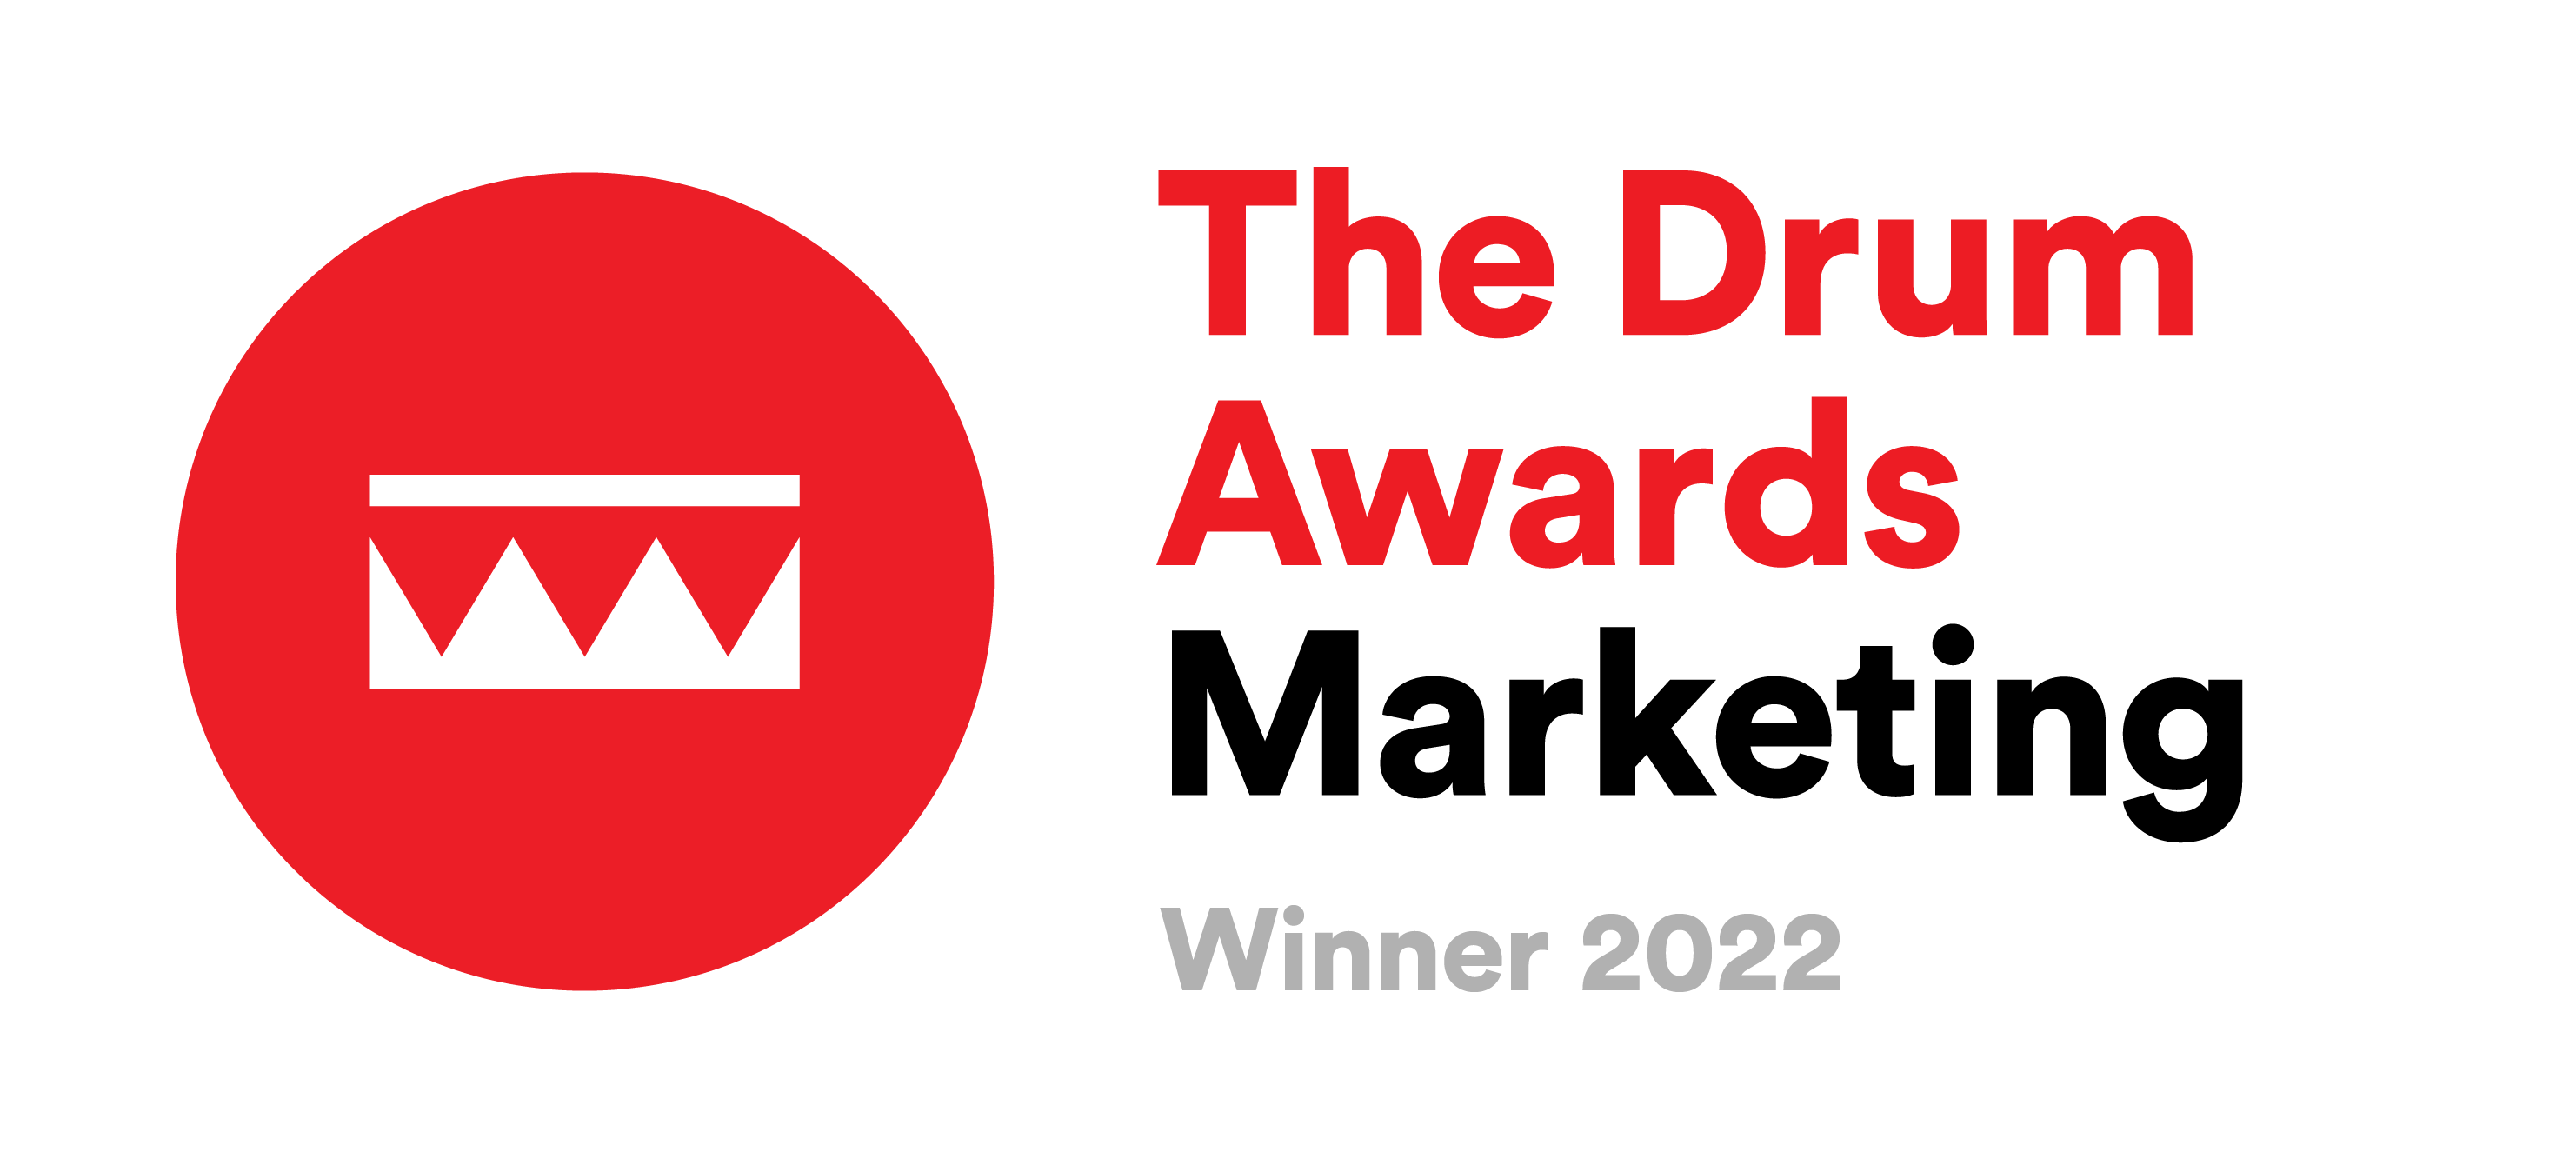 PR CAMPAIGN - THE DRUM AWARDS MARKETING 2022 award